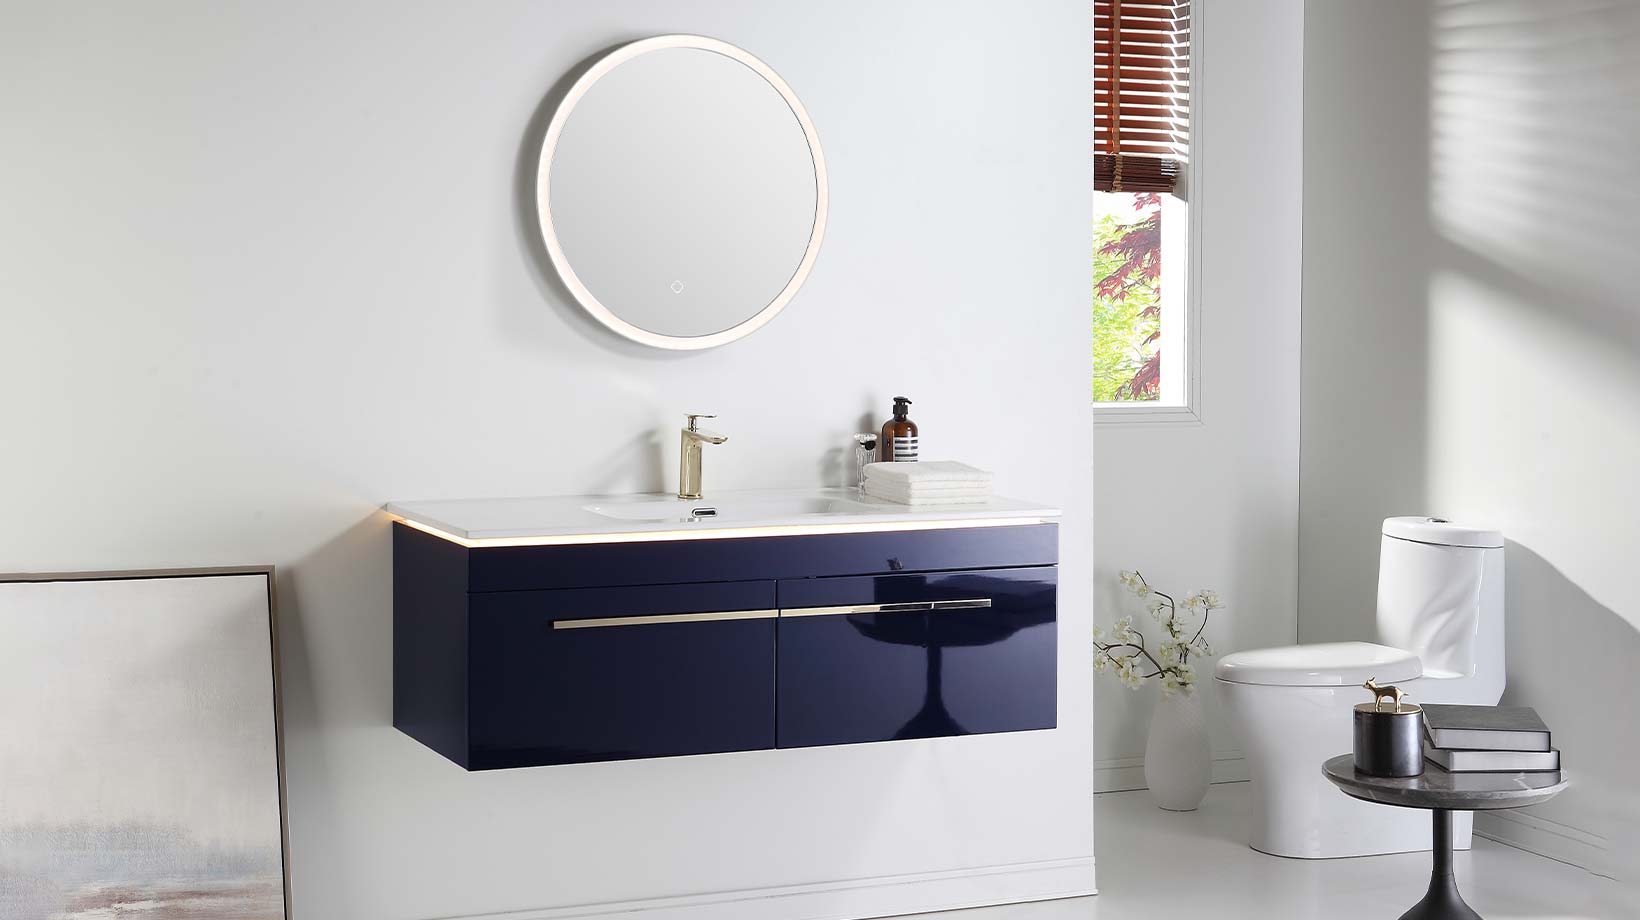 Custom Made Mirrored Bathroom Cabinets